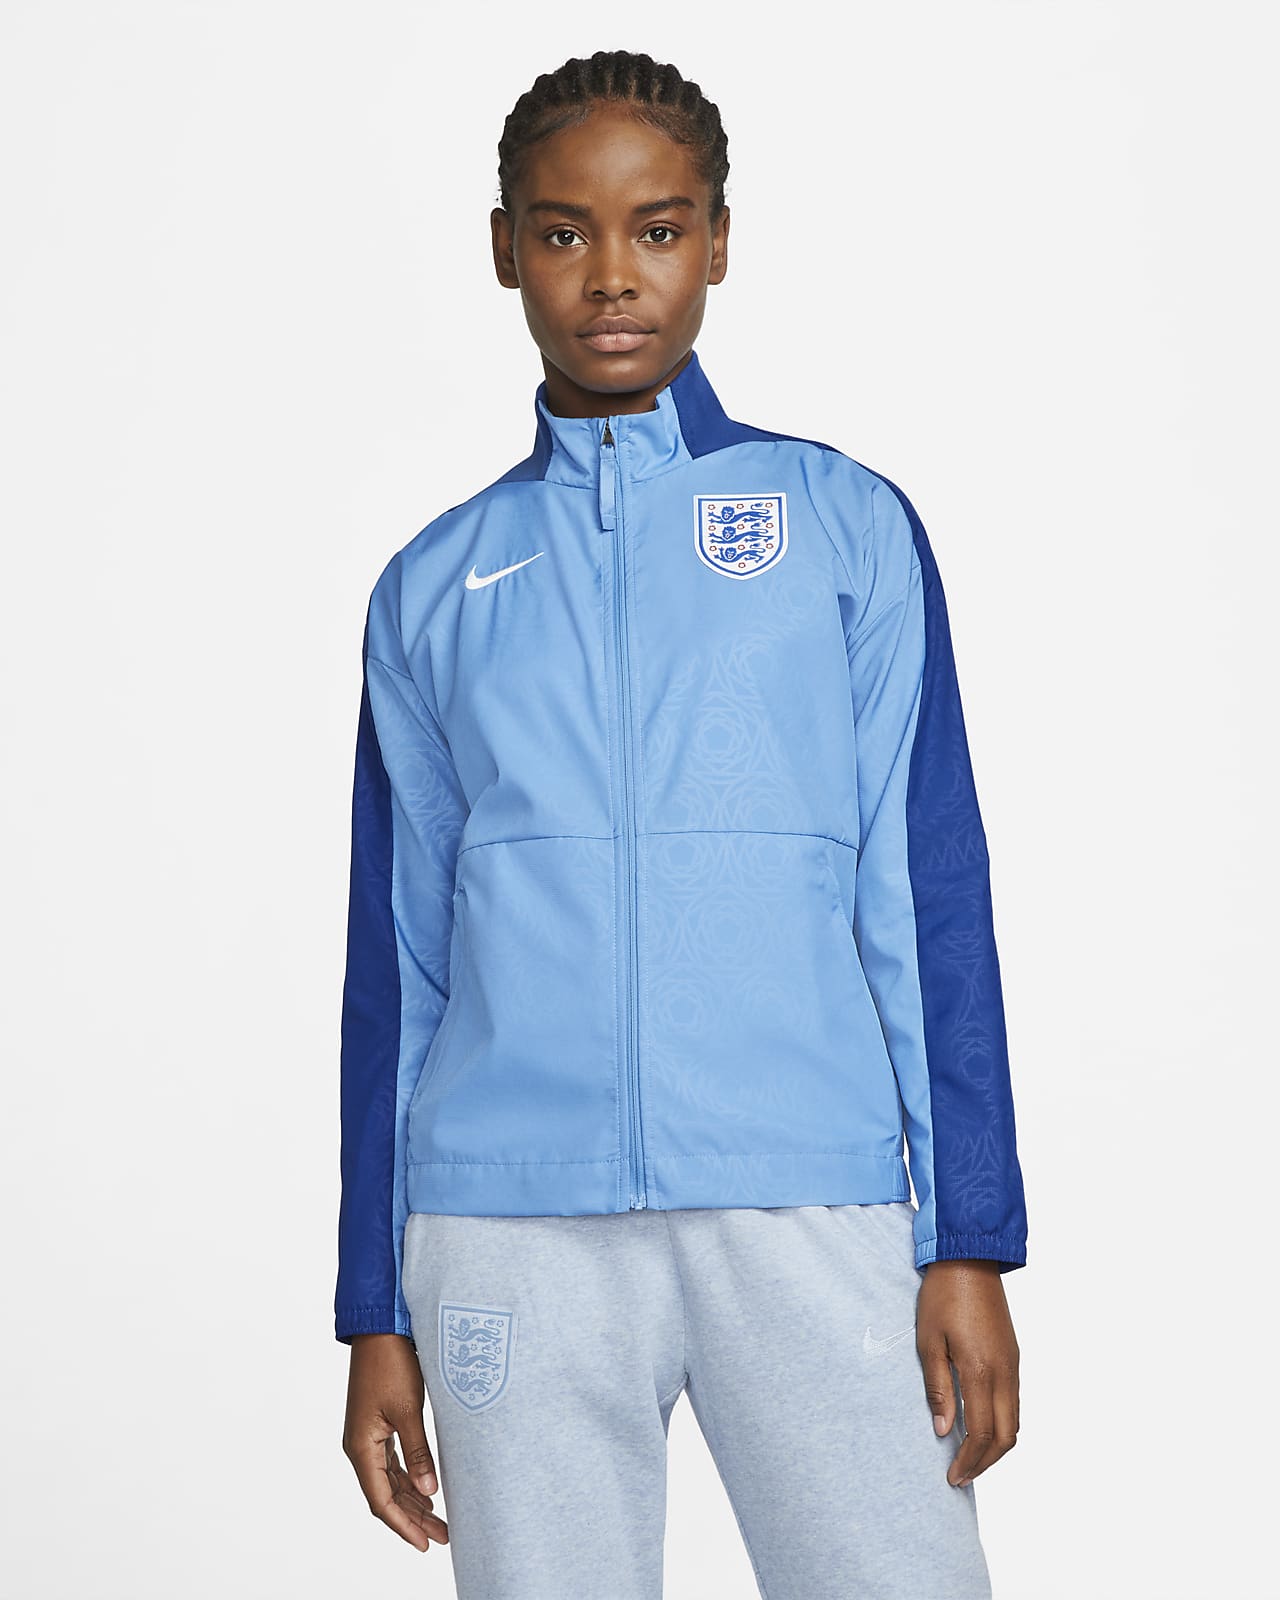 England Women's Nike Dri-FIT Anthem Soccer Jacket